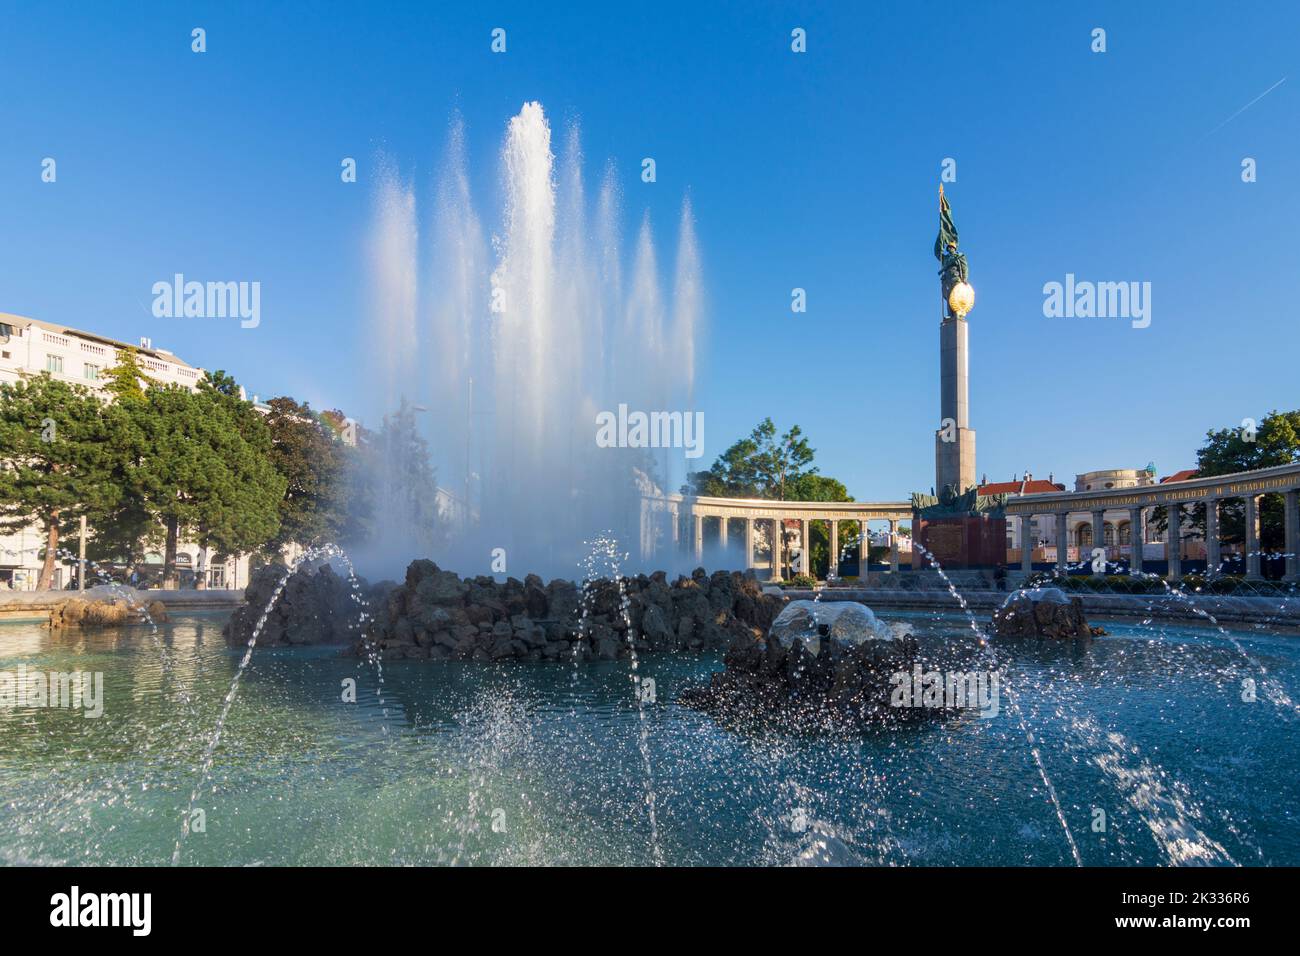 Wien, Vienne: Hochstrahlbrunnen (grande fontaine à jet), Heldendenkmal der Roten Armee (Mémorial de la guerre soviétique) en 03. Landstraße, Wien, Autriche Banque D'Images